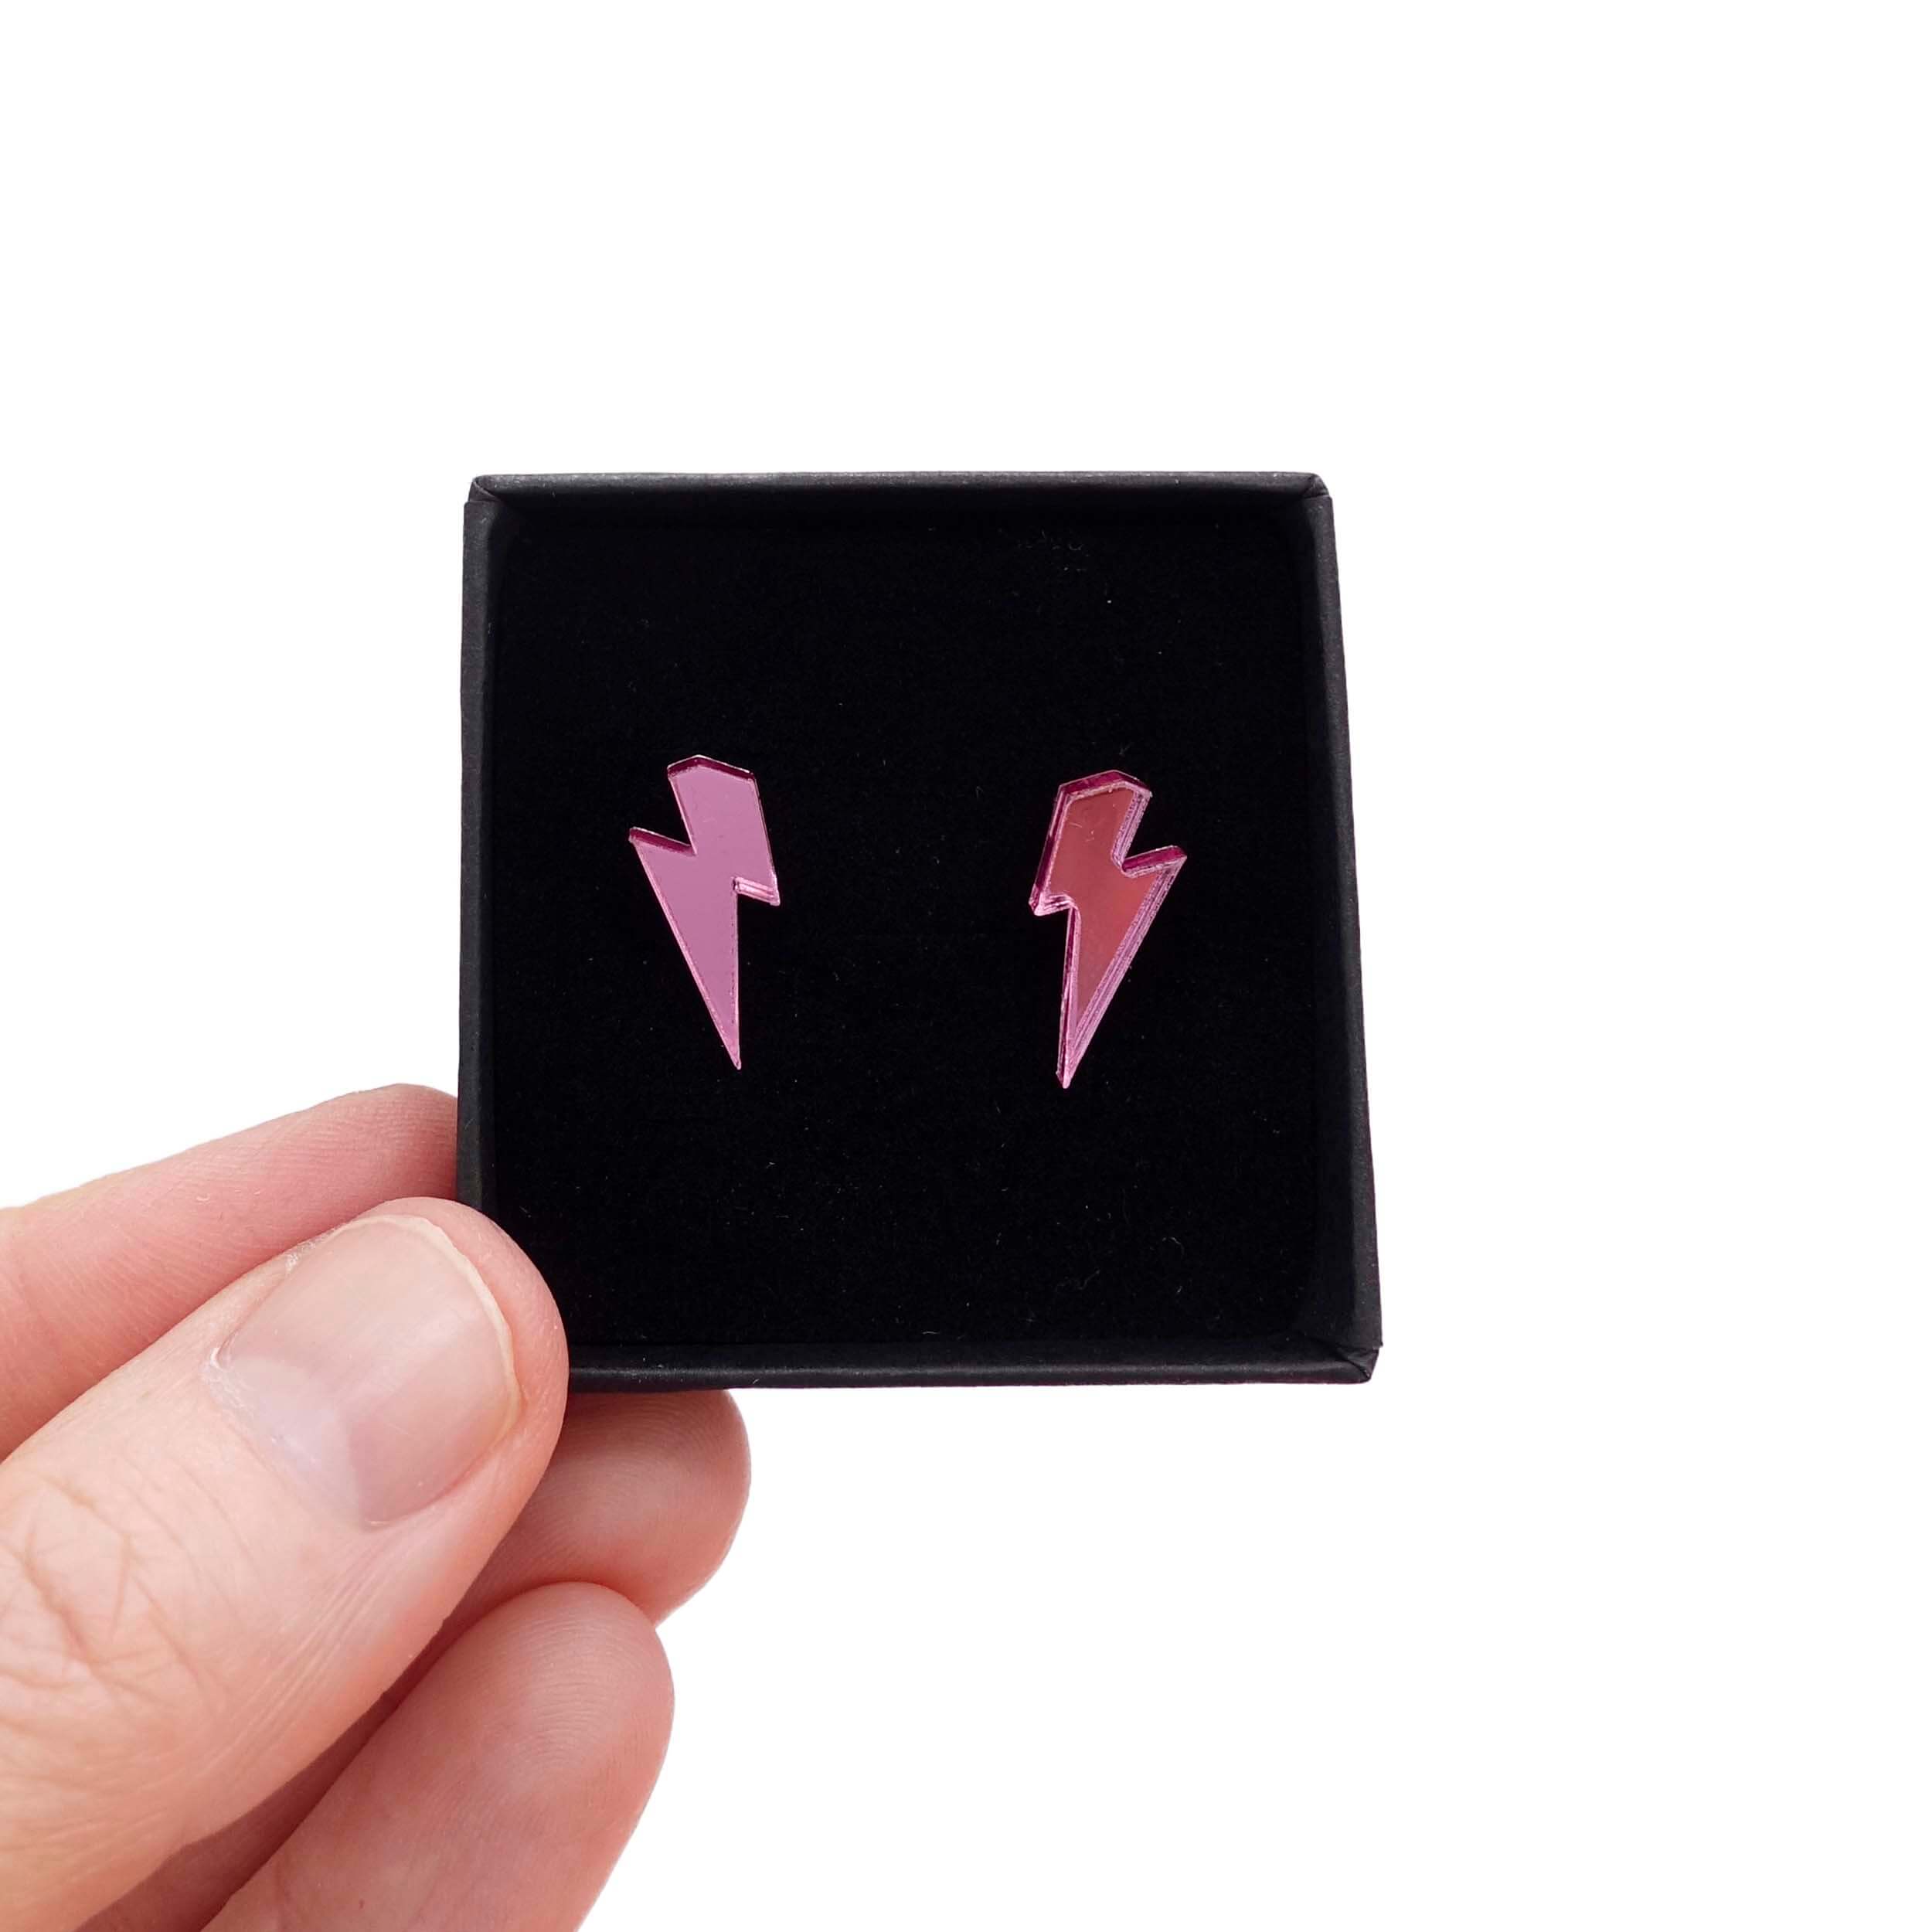 Tiny lightning bolt earrings in pink mirror. 